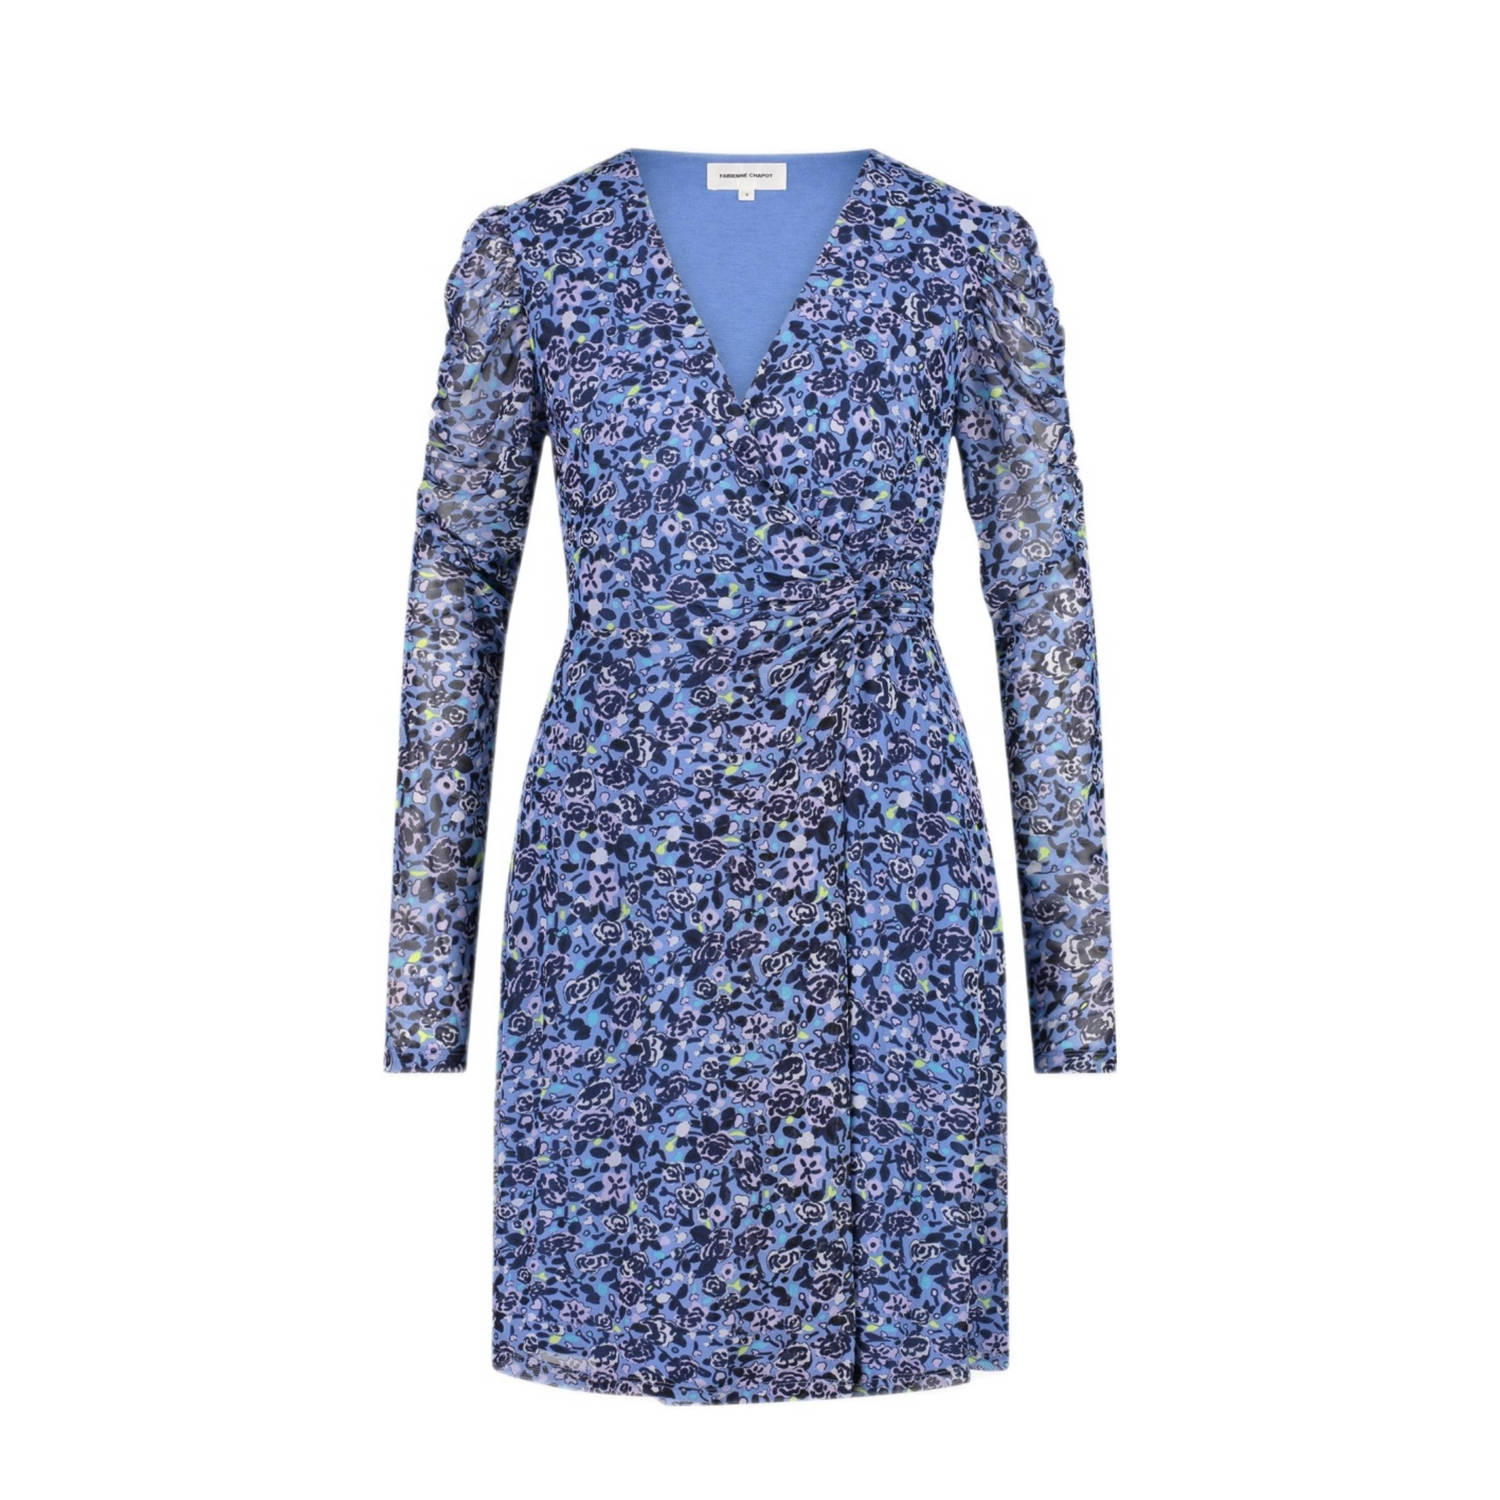 Fabienne Chapot jurk Flake met all over print blauw paars